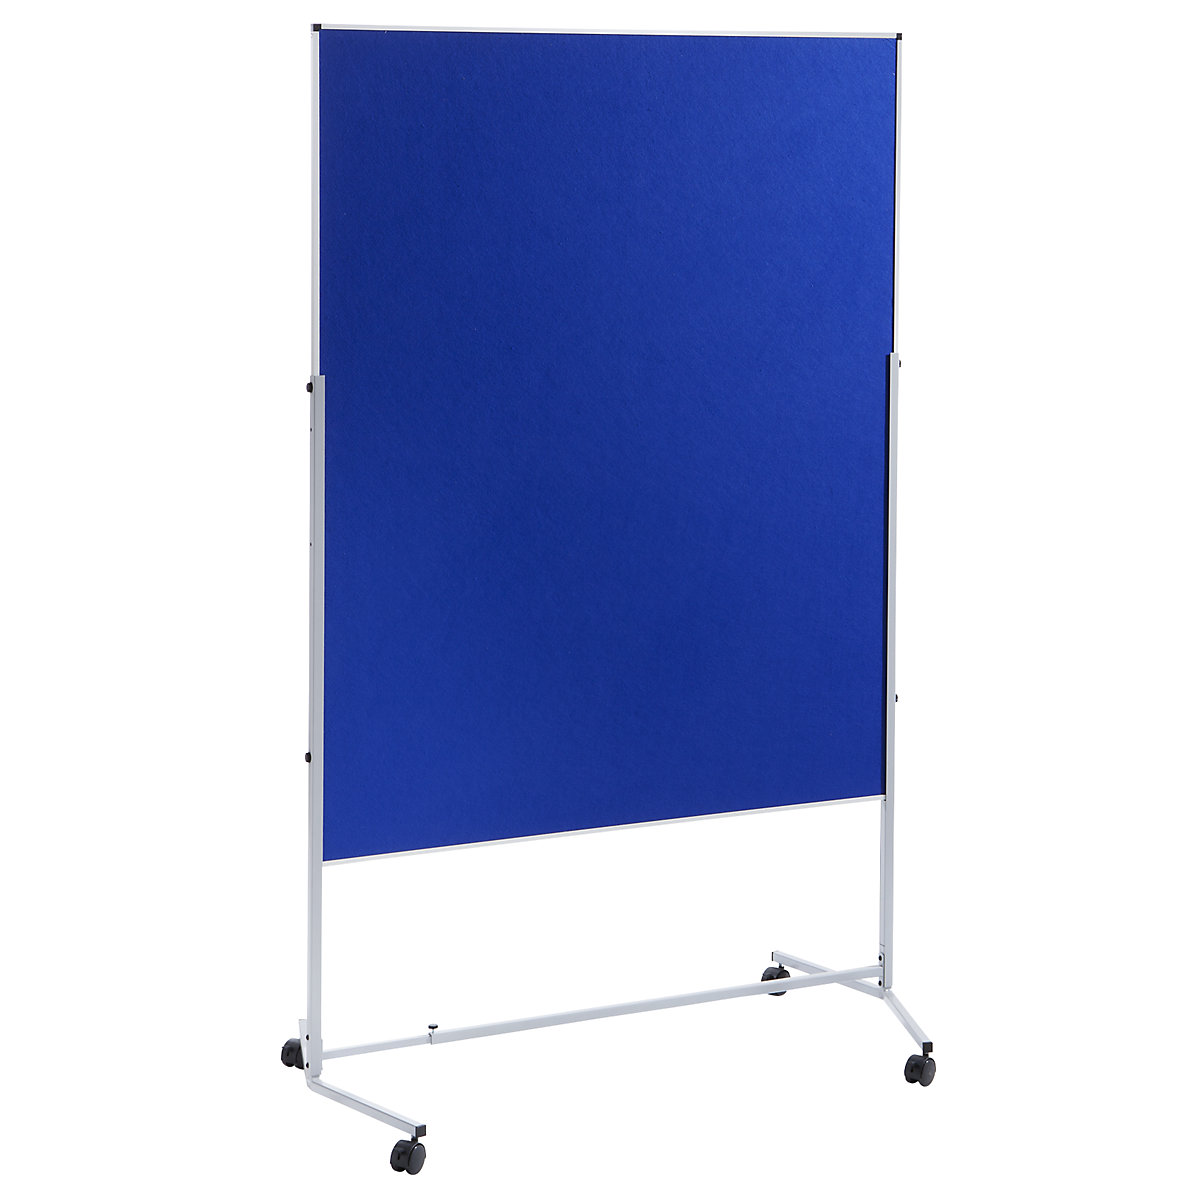 EUROKRAFTbasic – Presentation board, variable, felt coating on both sides, royal blue